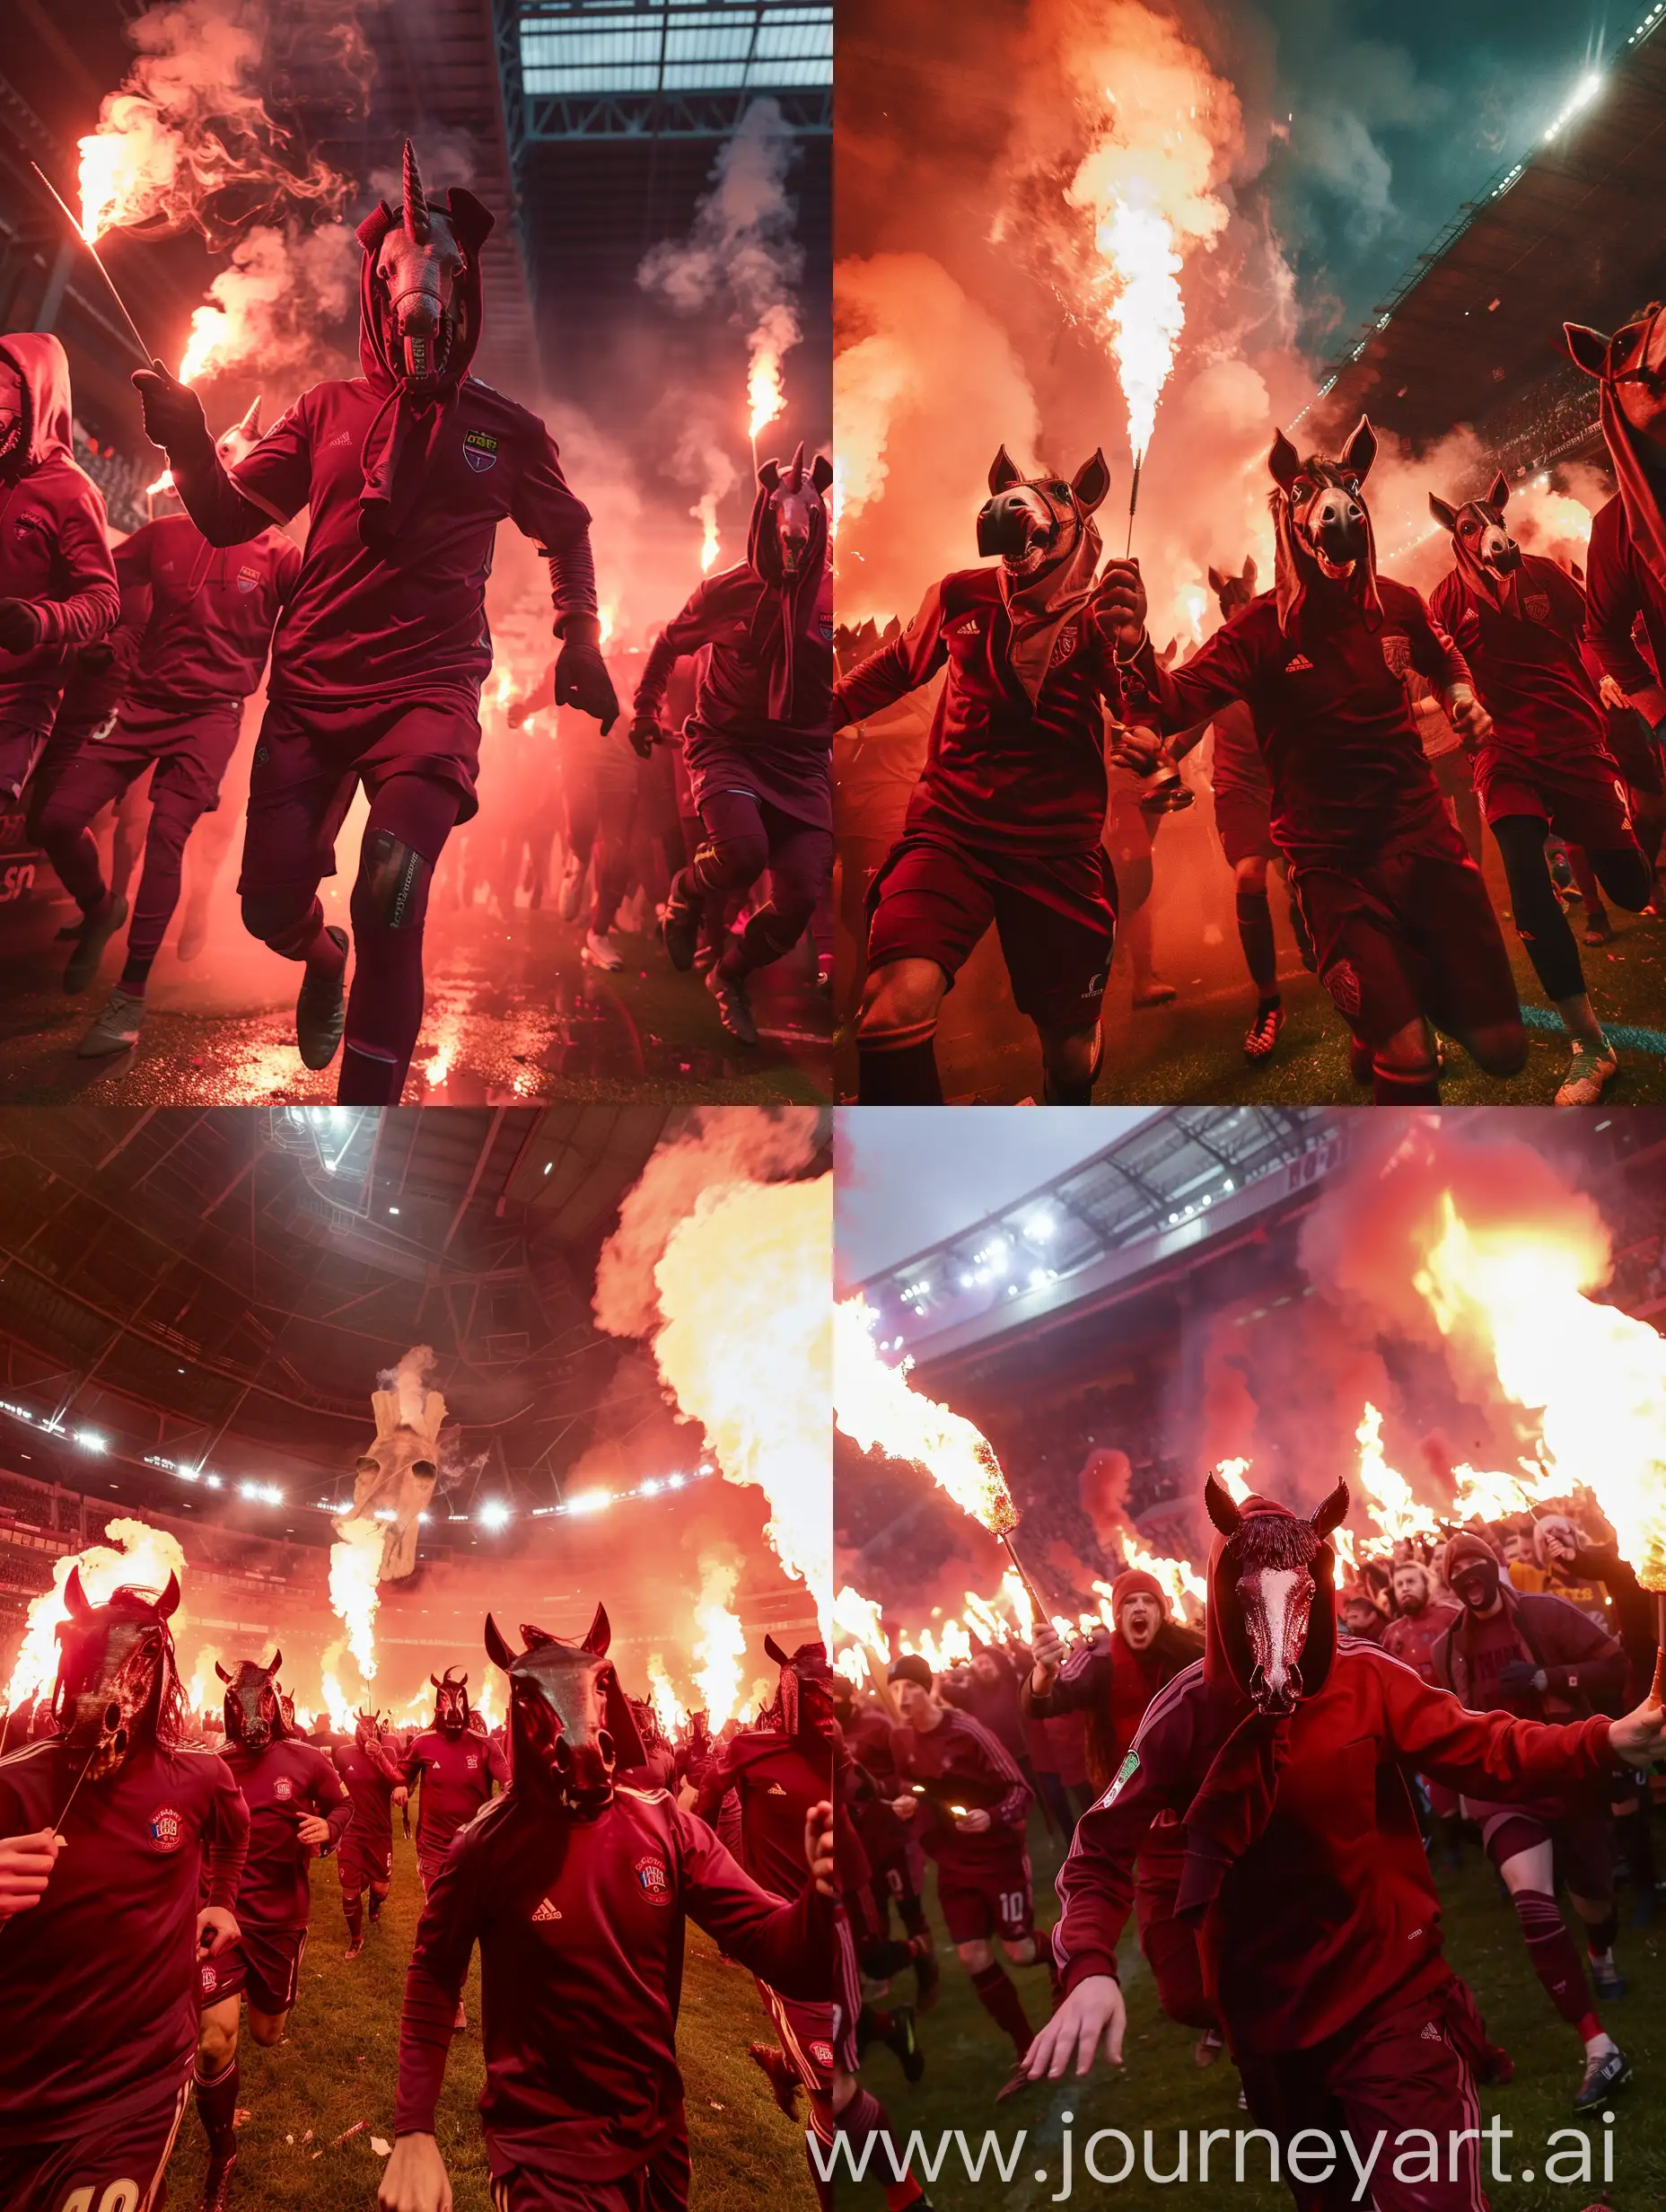 Energetic-Hooligans-with-Maroon-Attire-and-Horse-Masks-Ignite-Stadium-Atmosphere